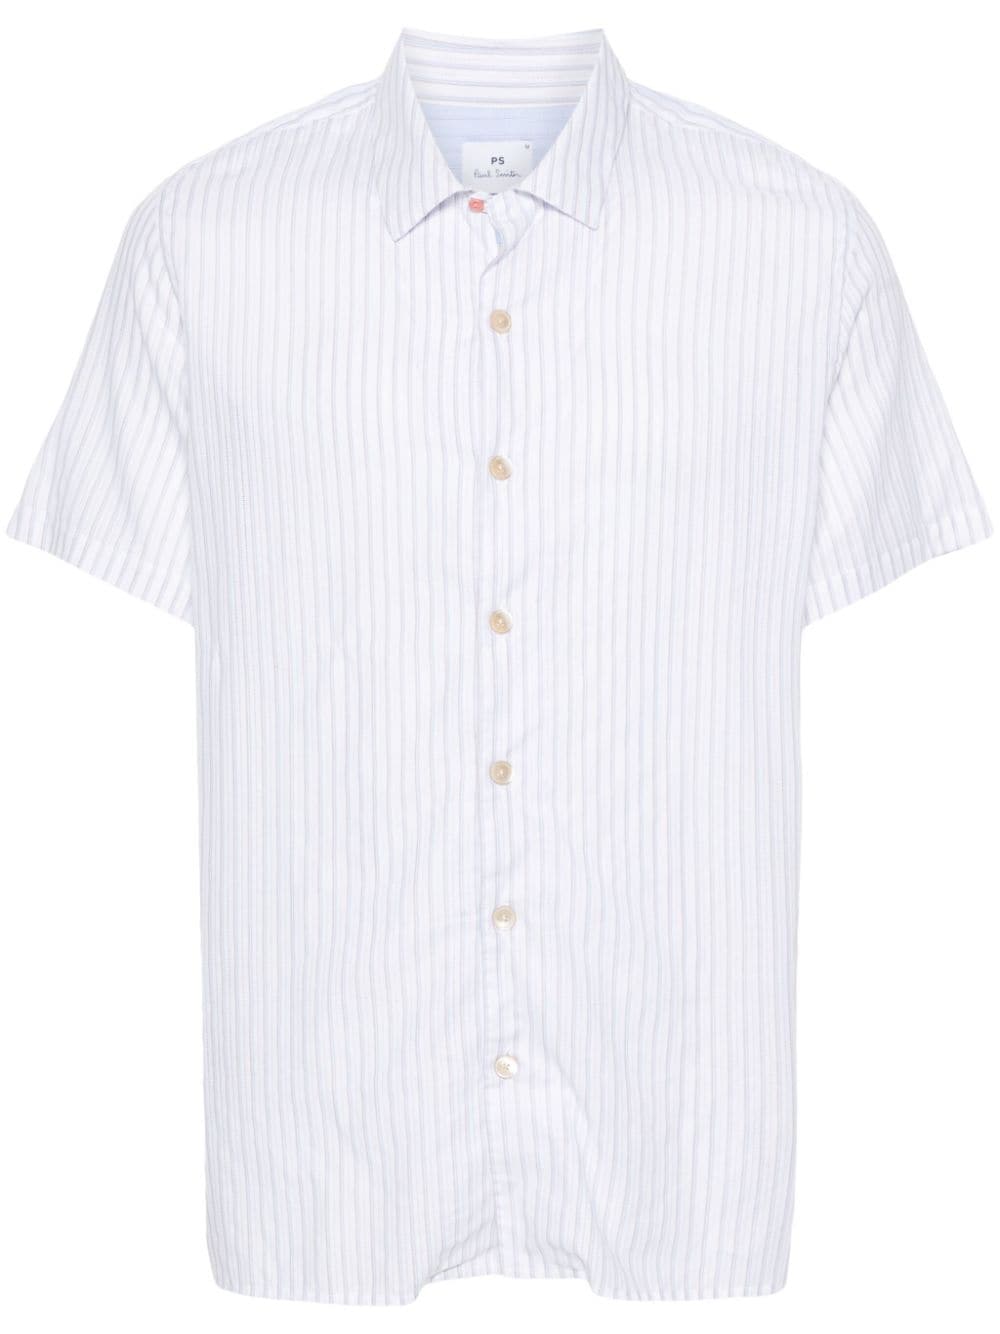 halo-stripe cotton shirt